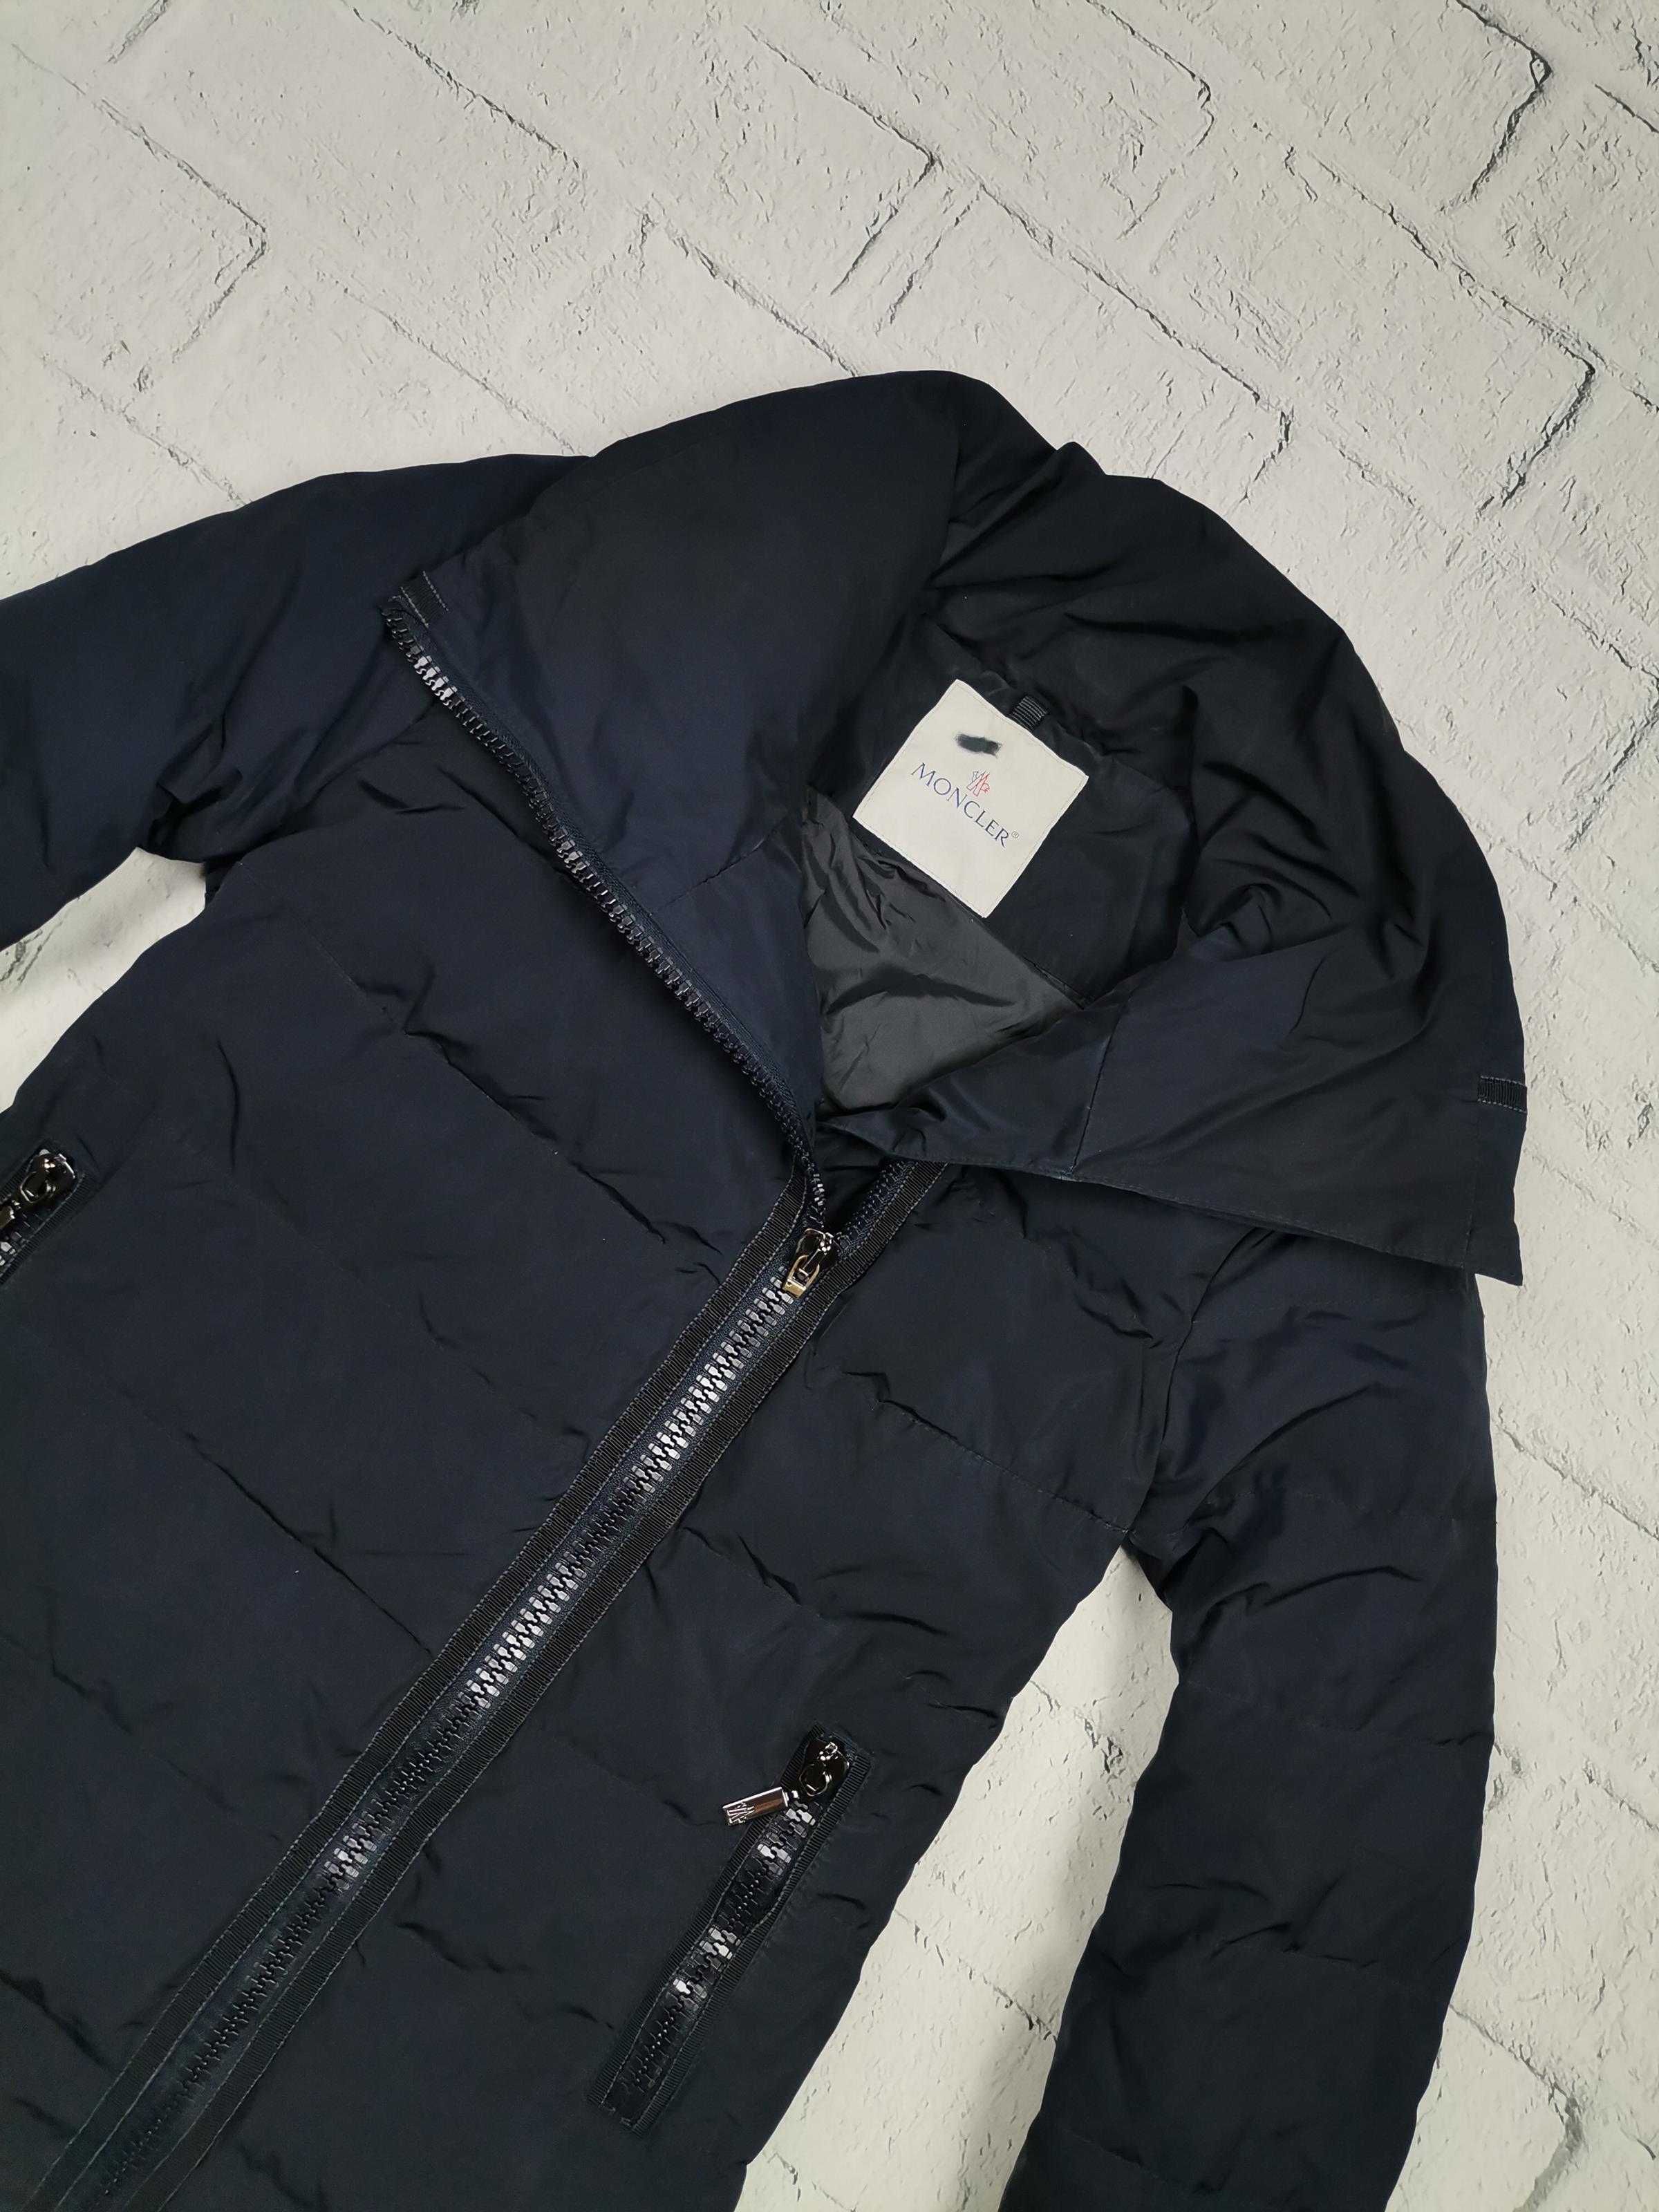 MONCLER Gerboise Down Puffer Jacket Coat Full Zip Parka Damska 0 XS/S